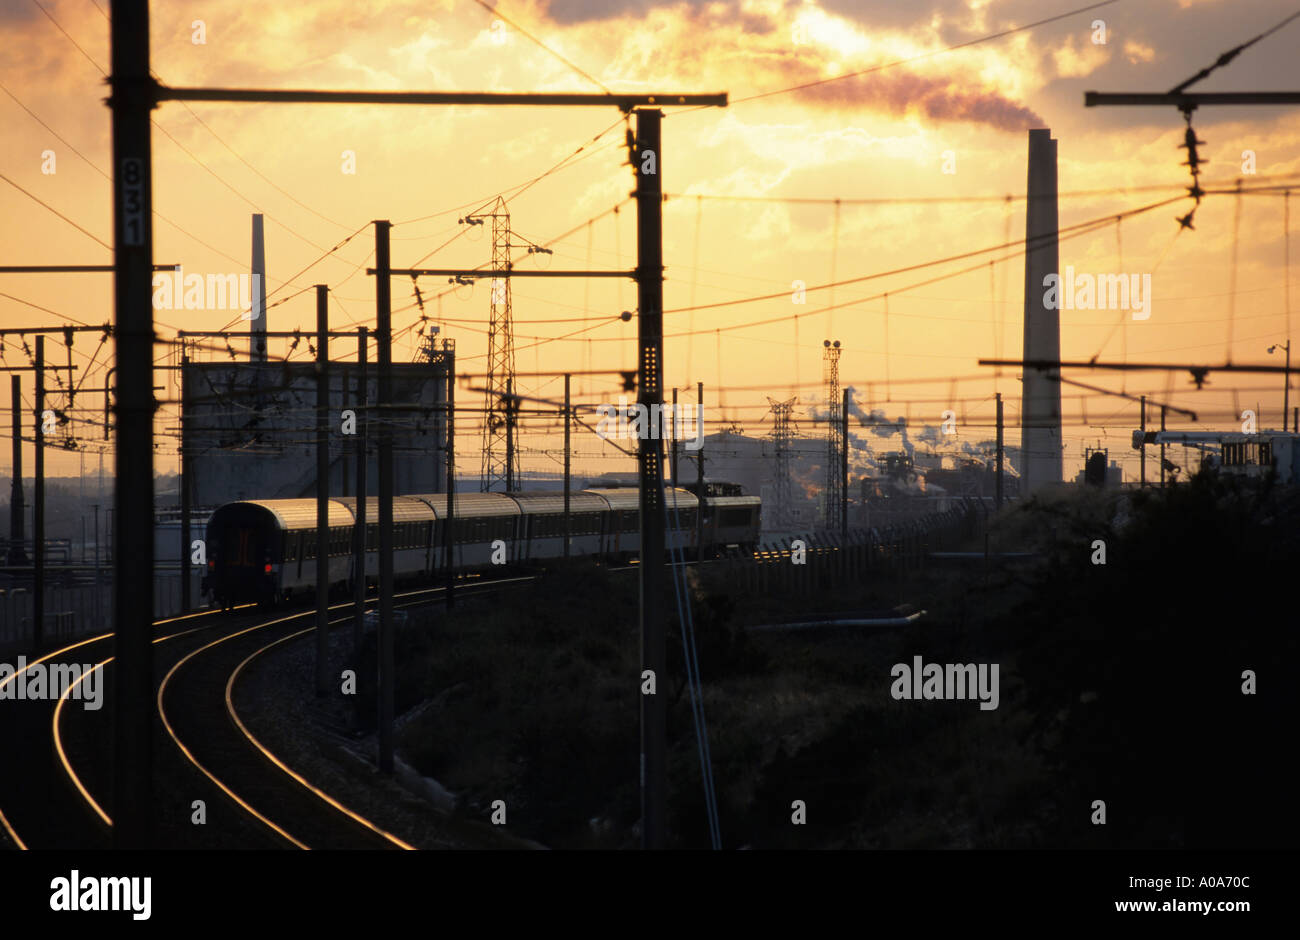 France Berre Train On Railways With Smoking Chimney Stock Photo